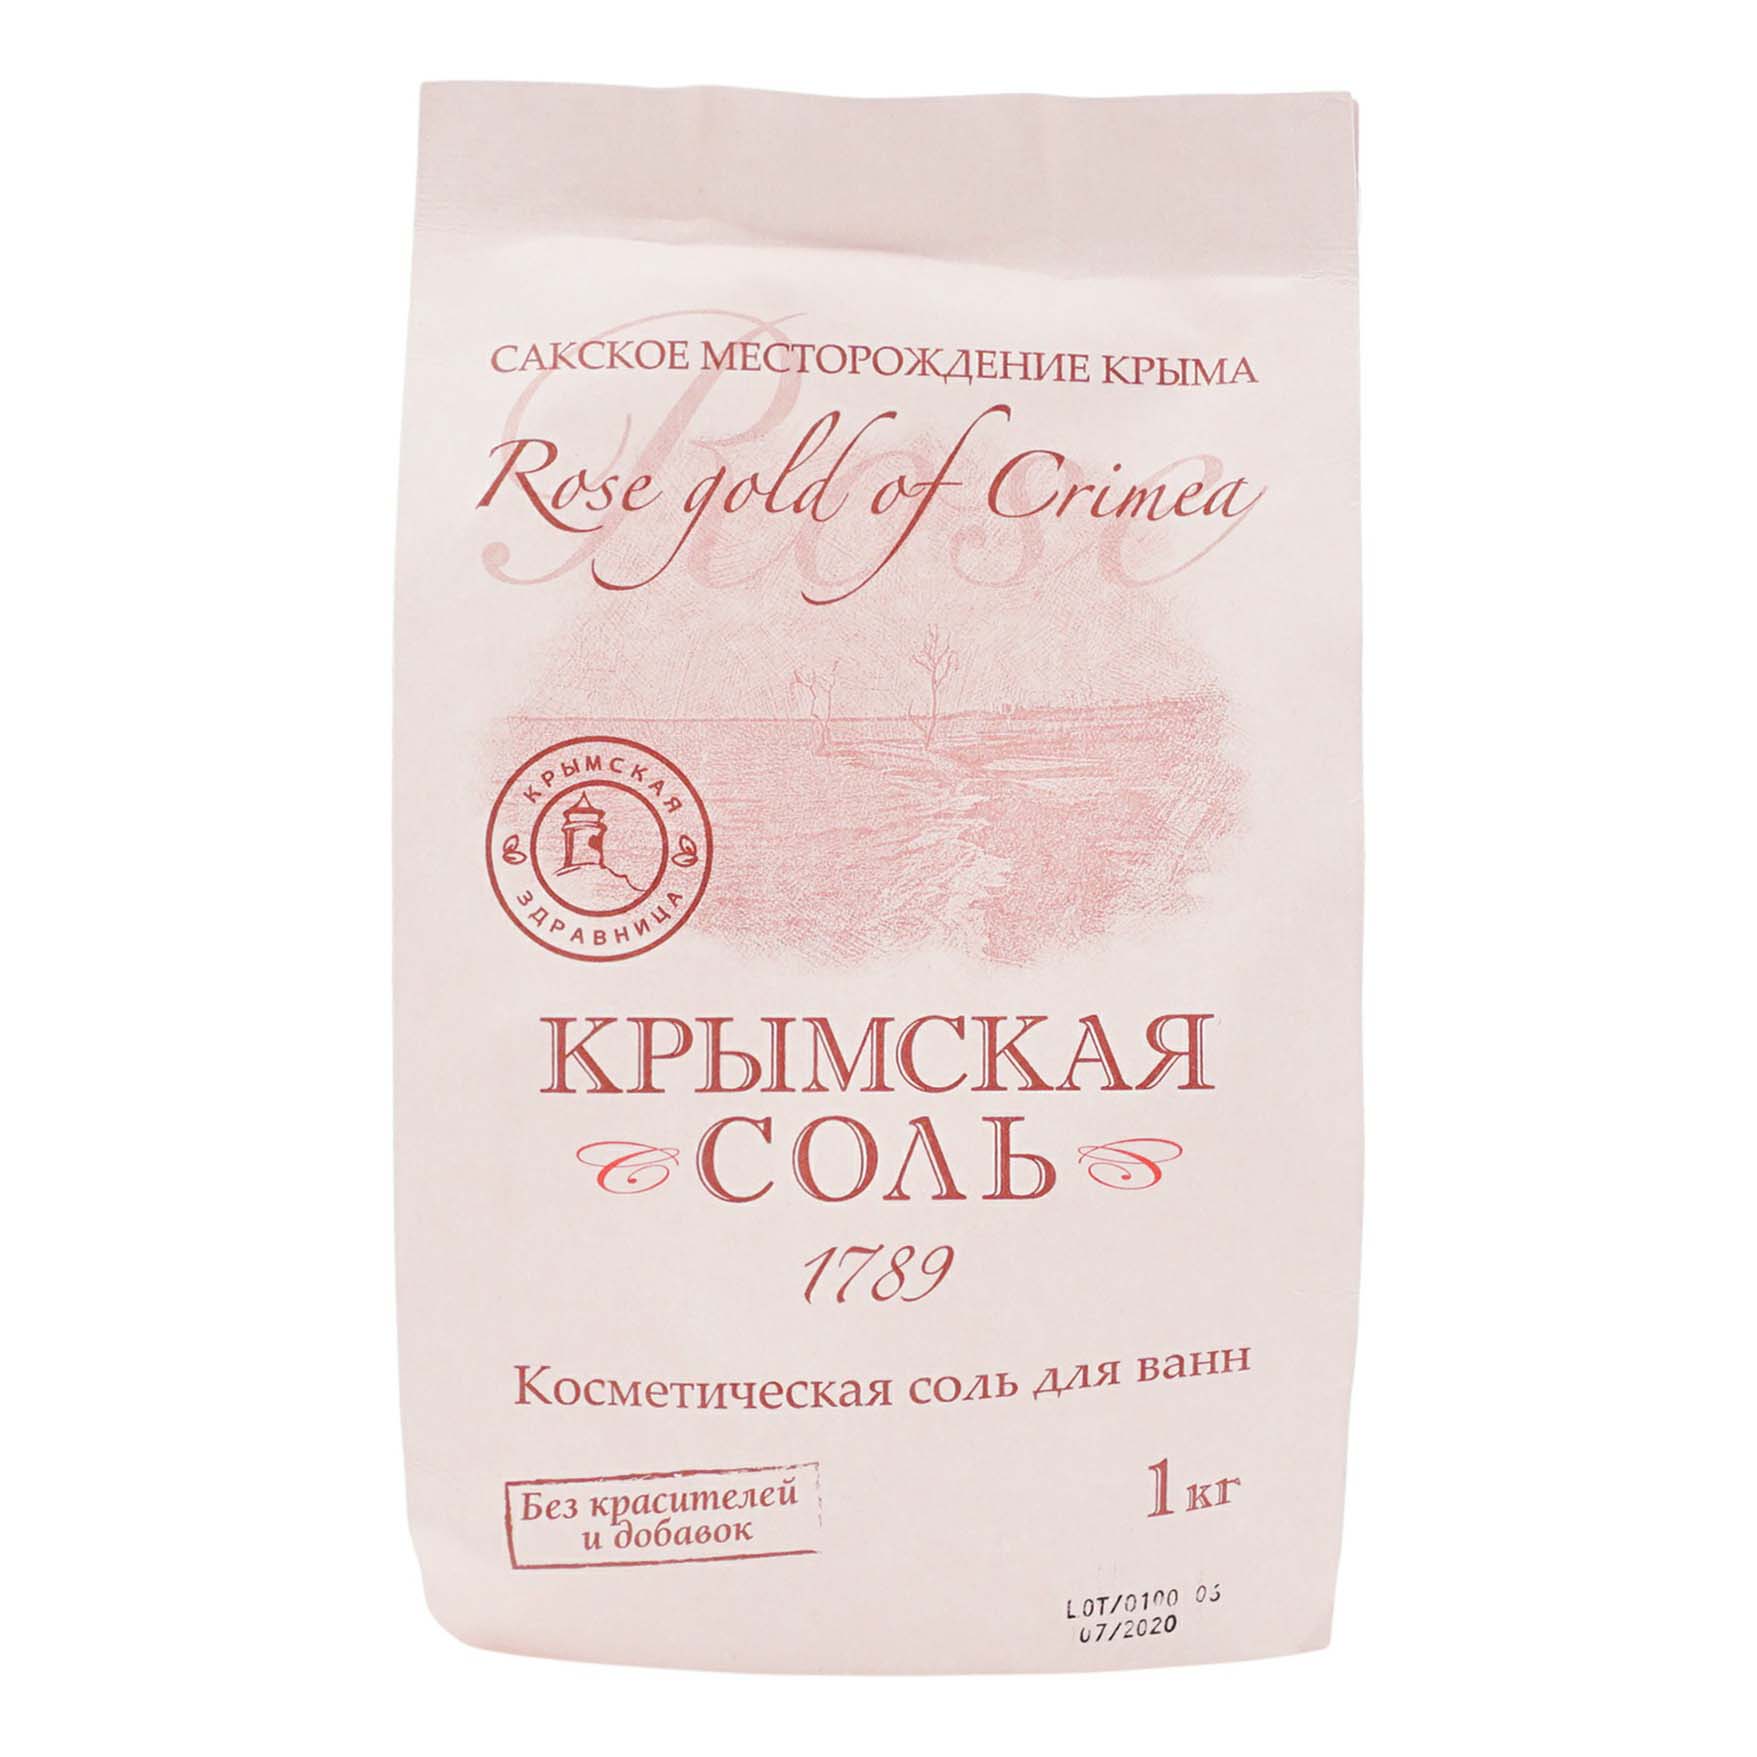 Соль для ванны Крымская здравница Крымская Сакская 1 кг соль для ванны детская крымская морская розовая сакская aura rite 1 кг